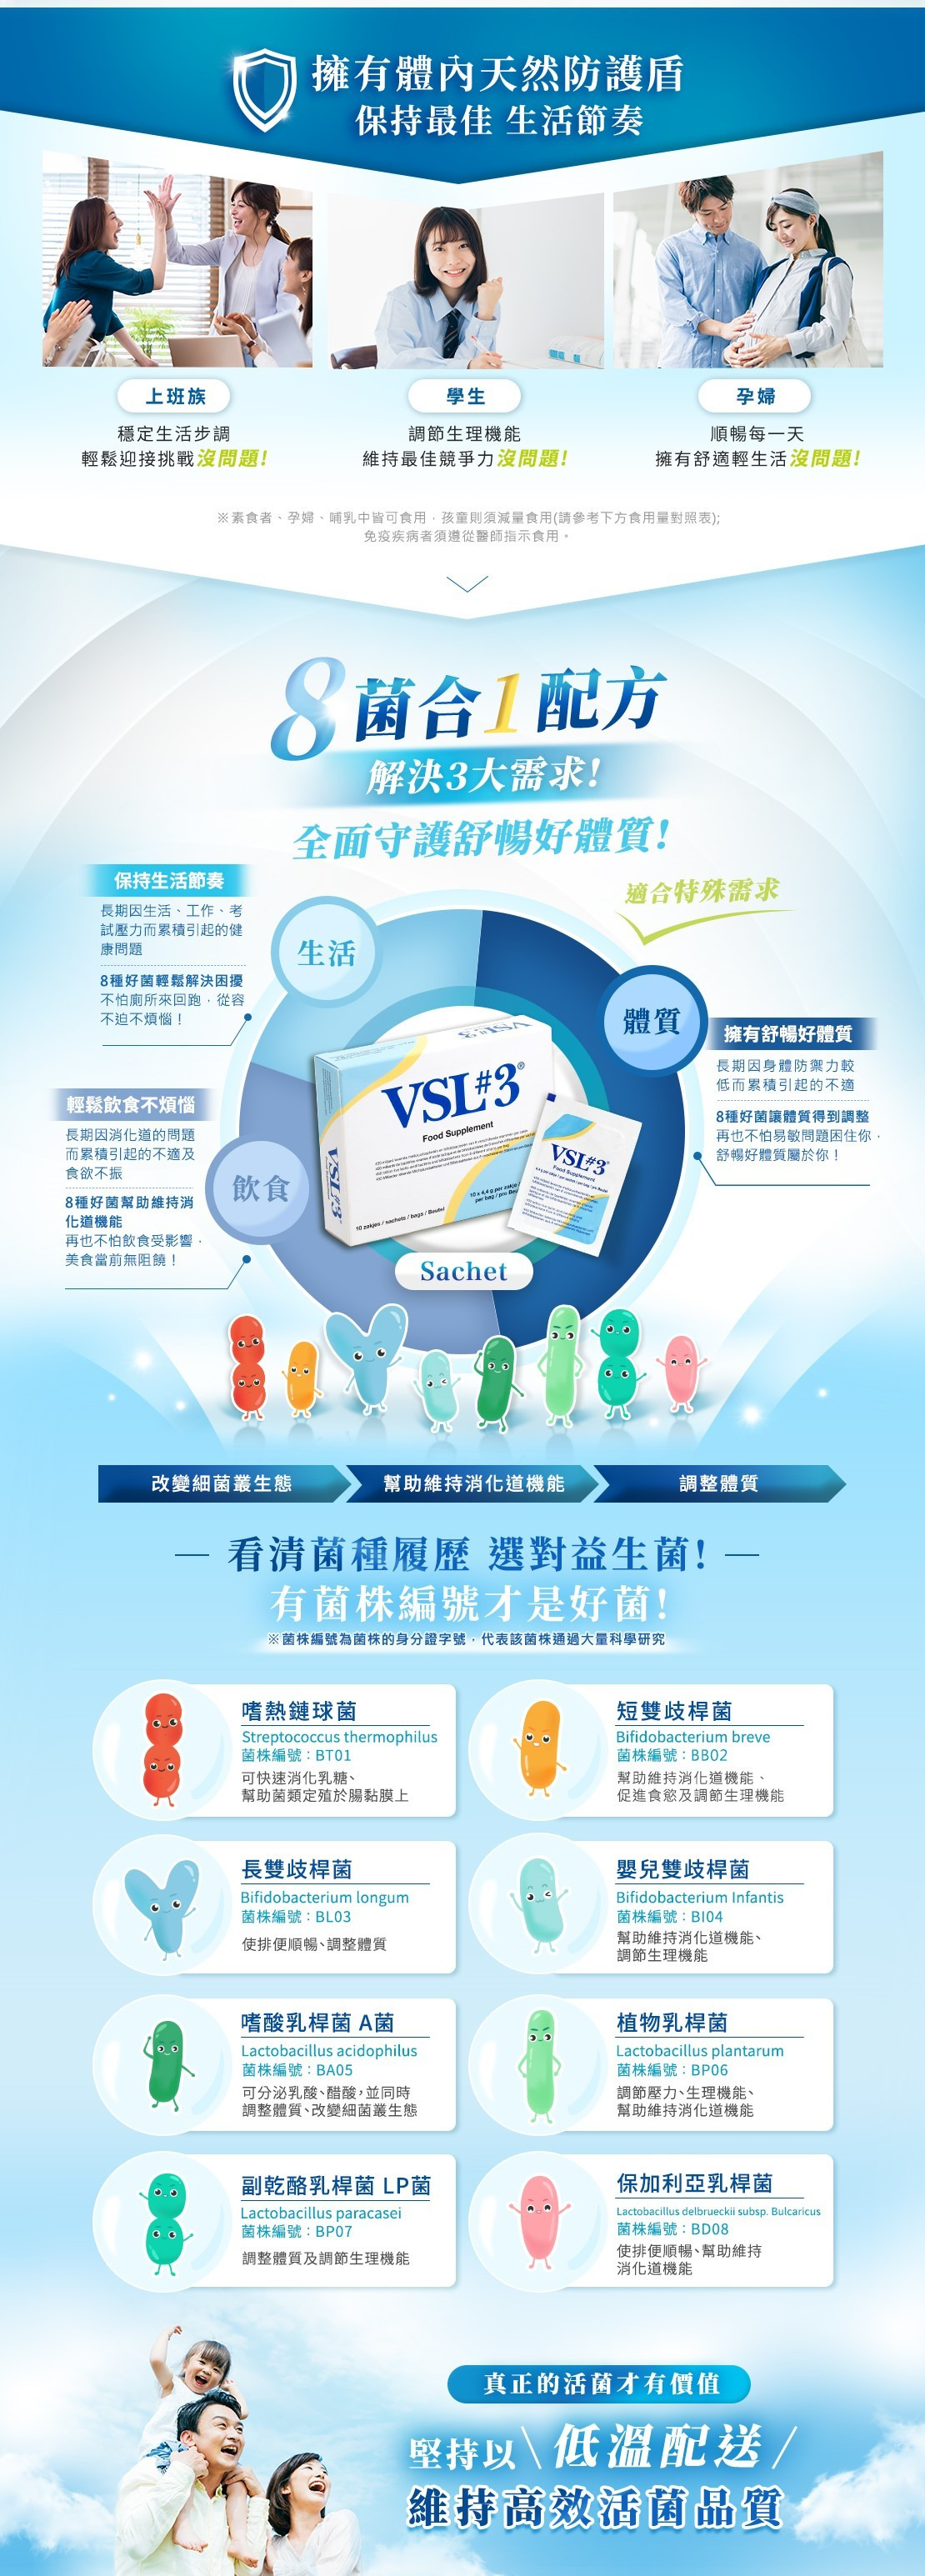 VSL益生菌,VSL#3,4500億活菌,專業級益生菌